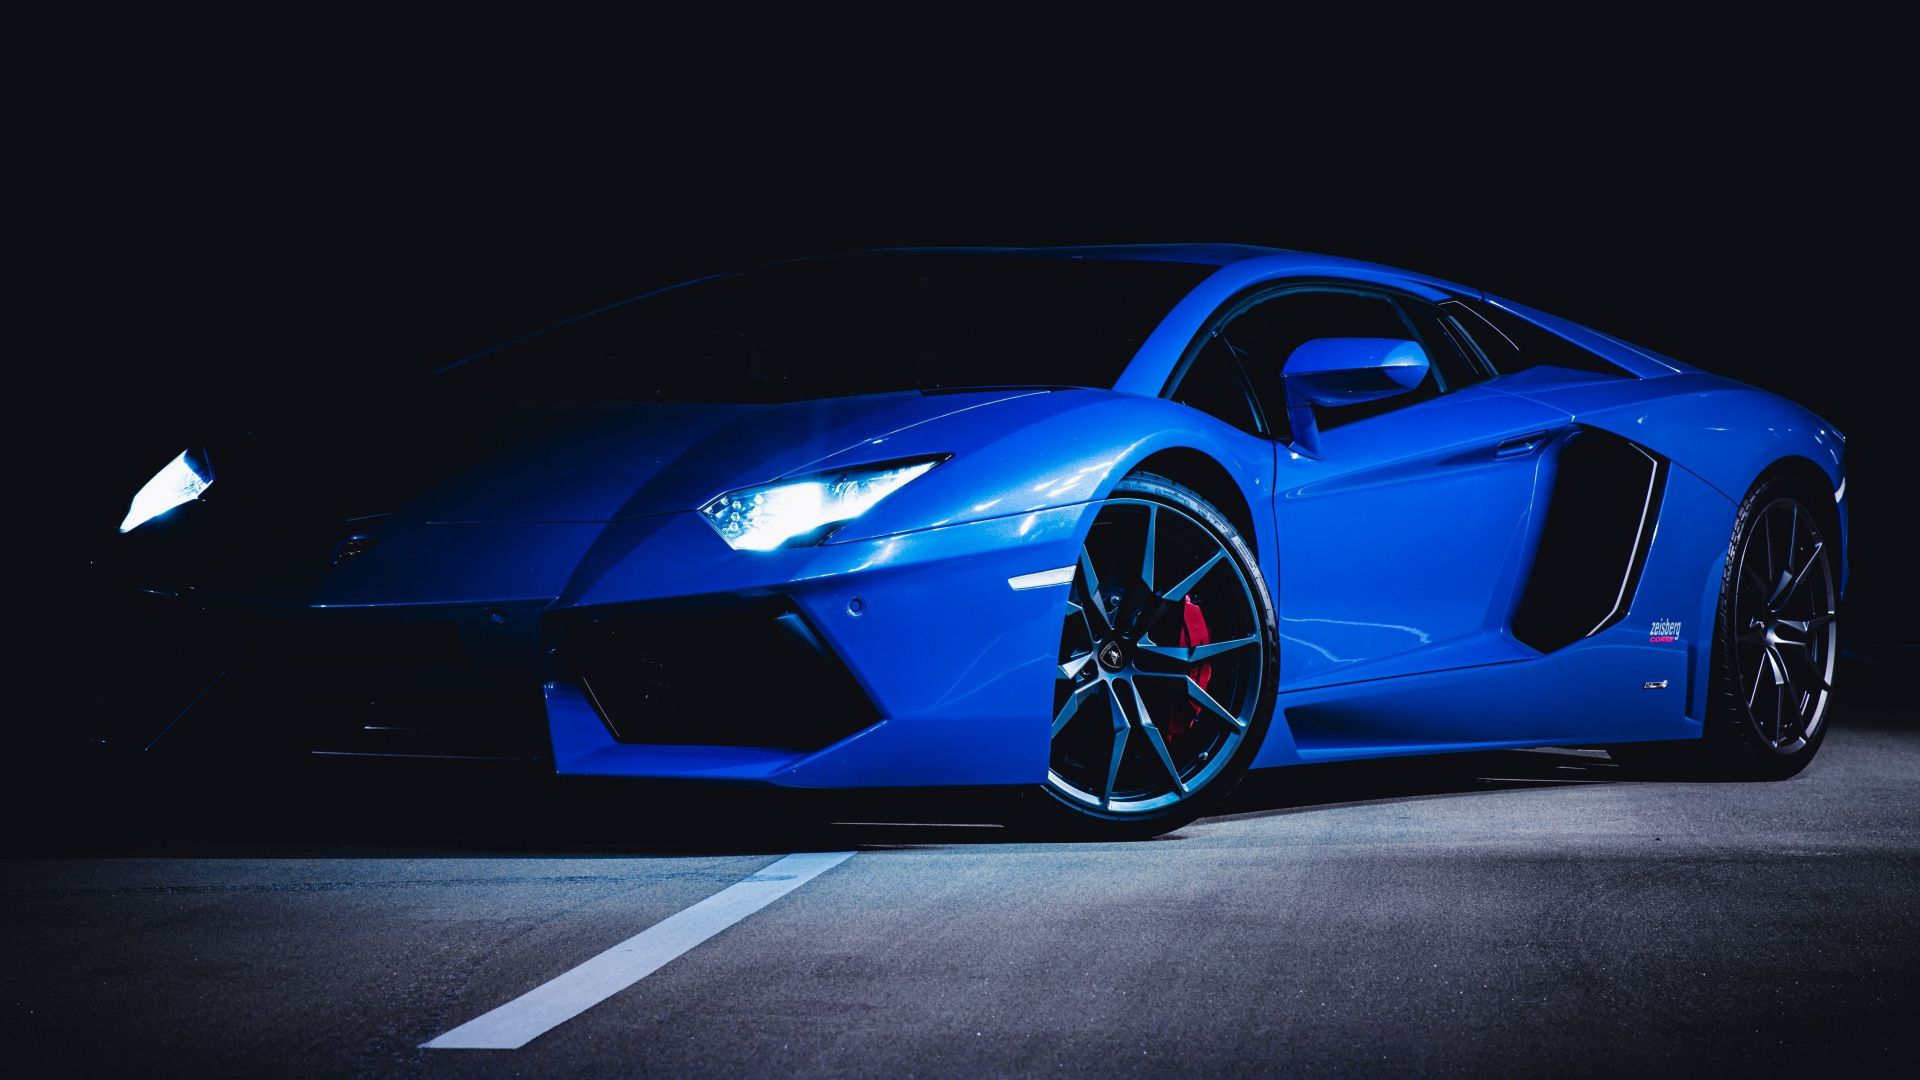 Sports car, blue lamborghini wallpaper, HD image, picture, background, c090dd